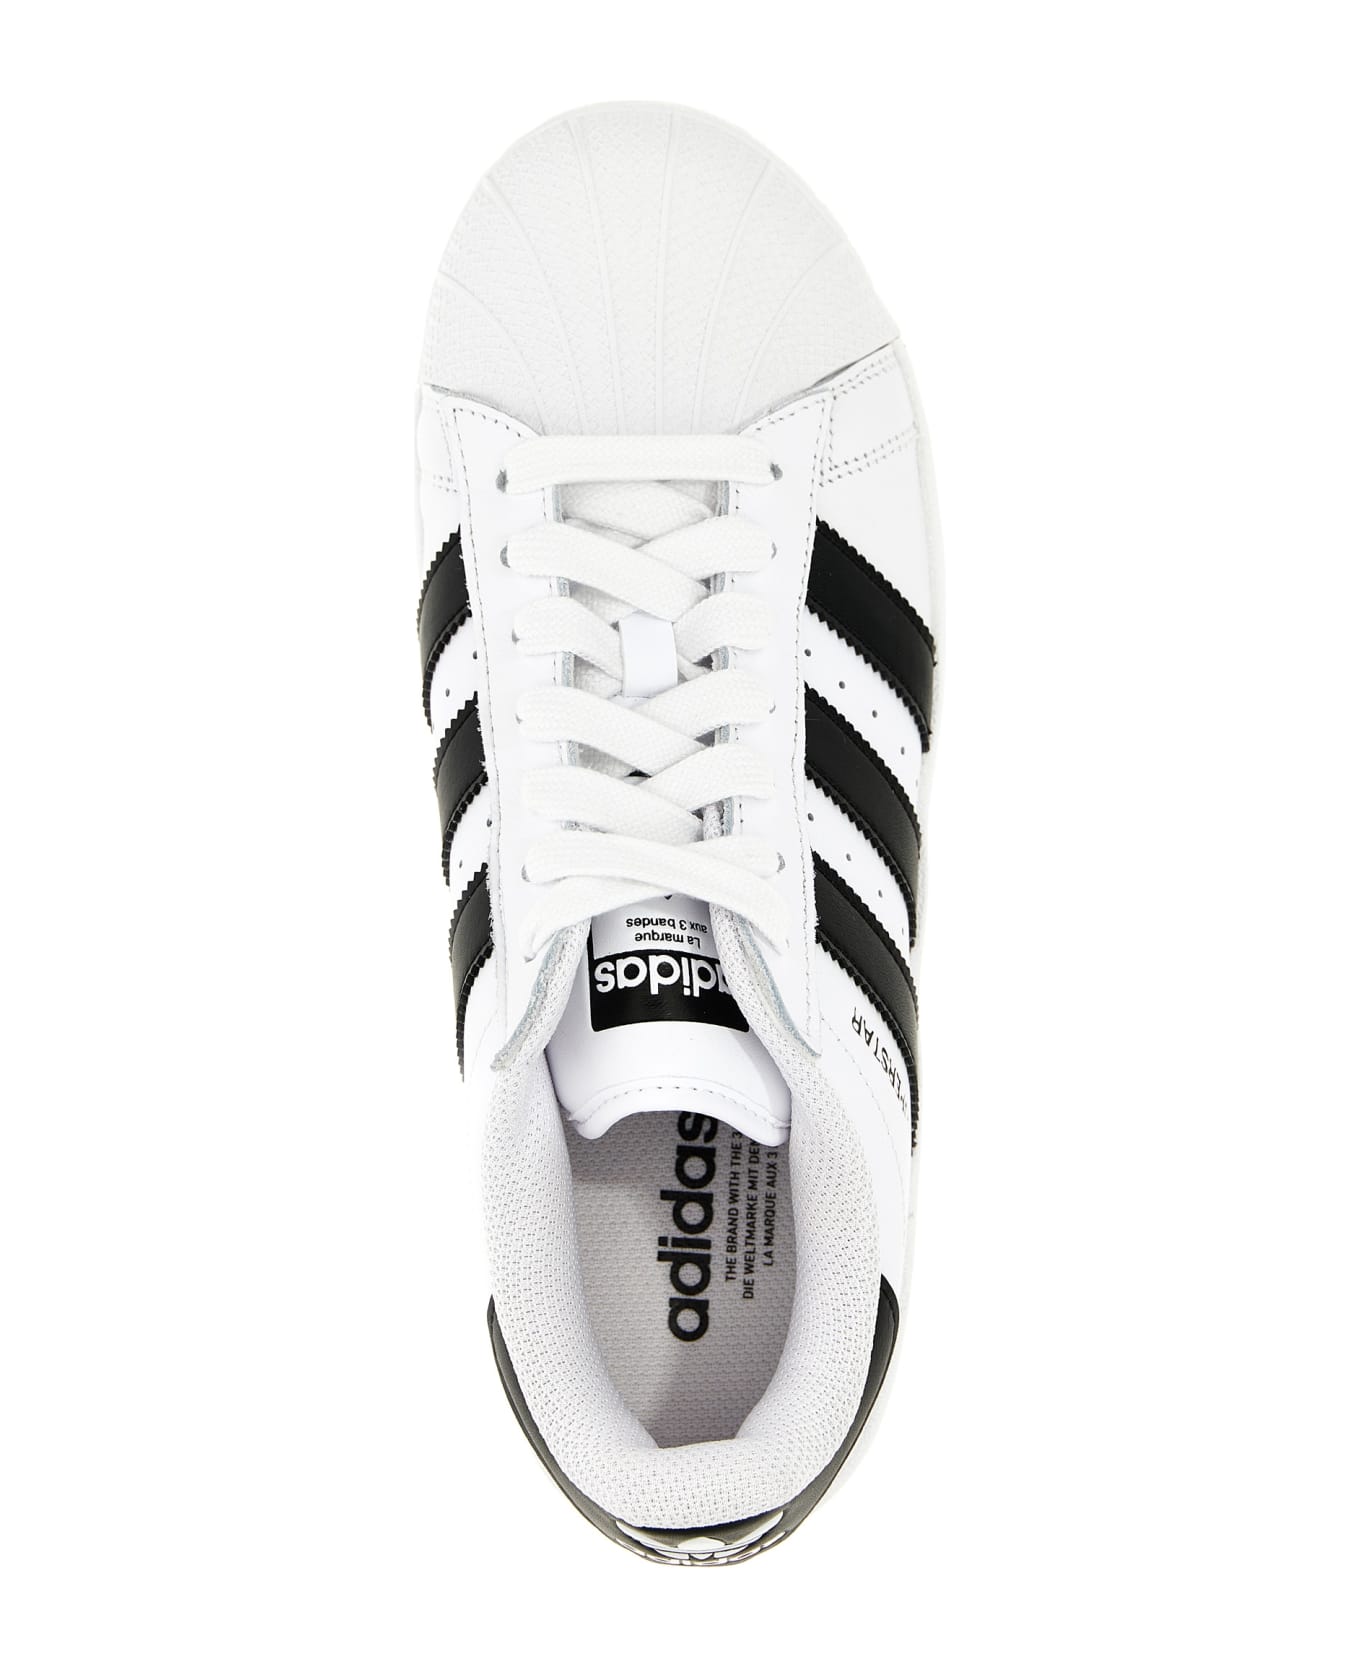 Adidas Originals 'superstar Xlg' Sneakers - White/Black